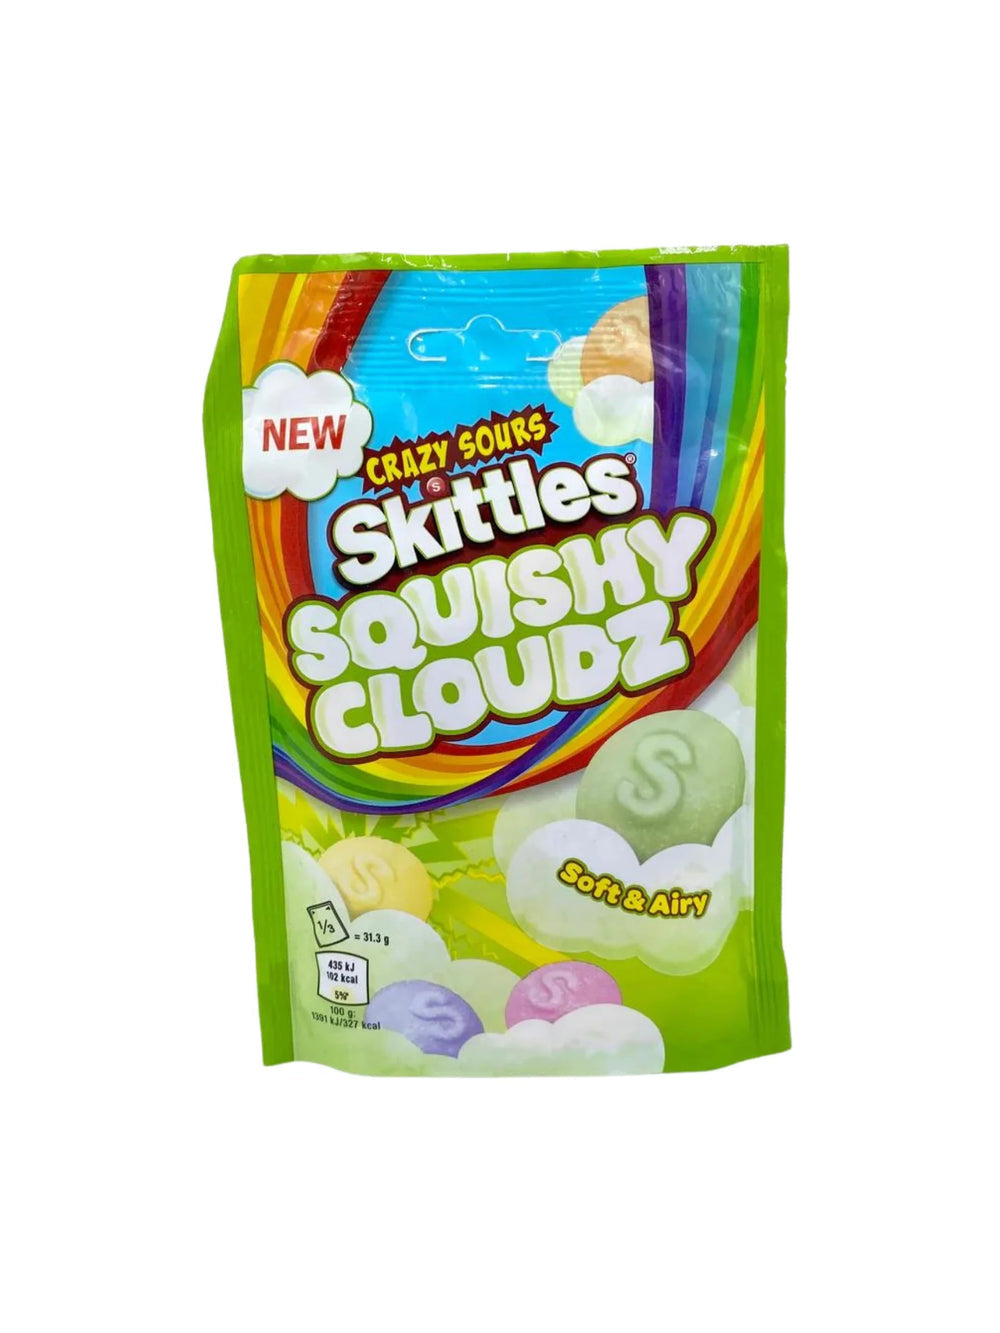 Skittles Squishy Cloudz Sour